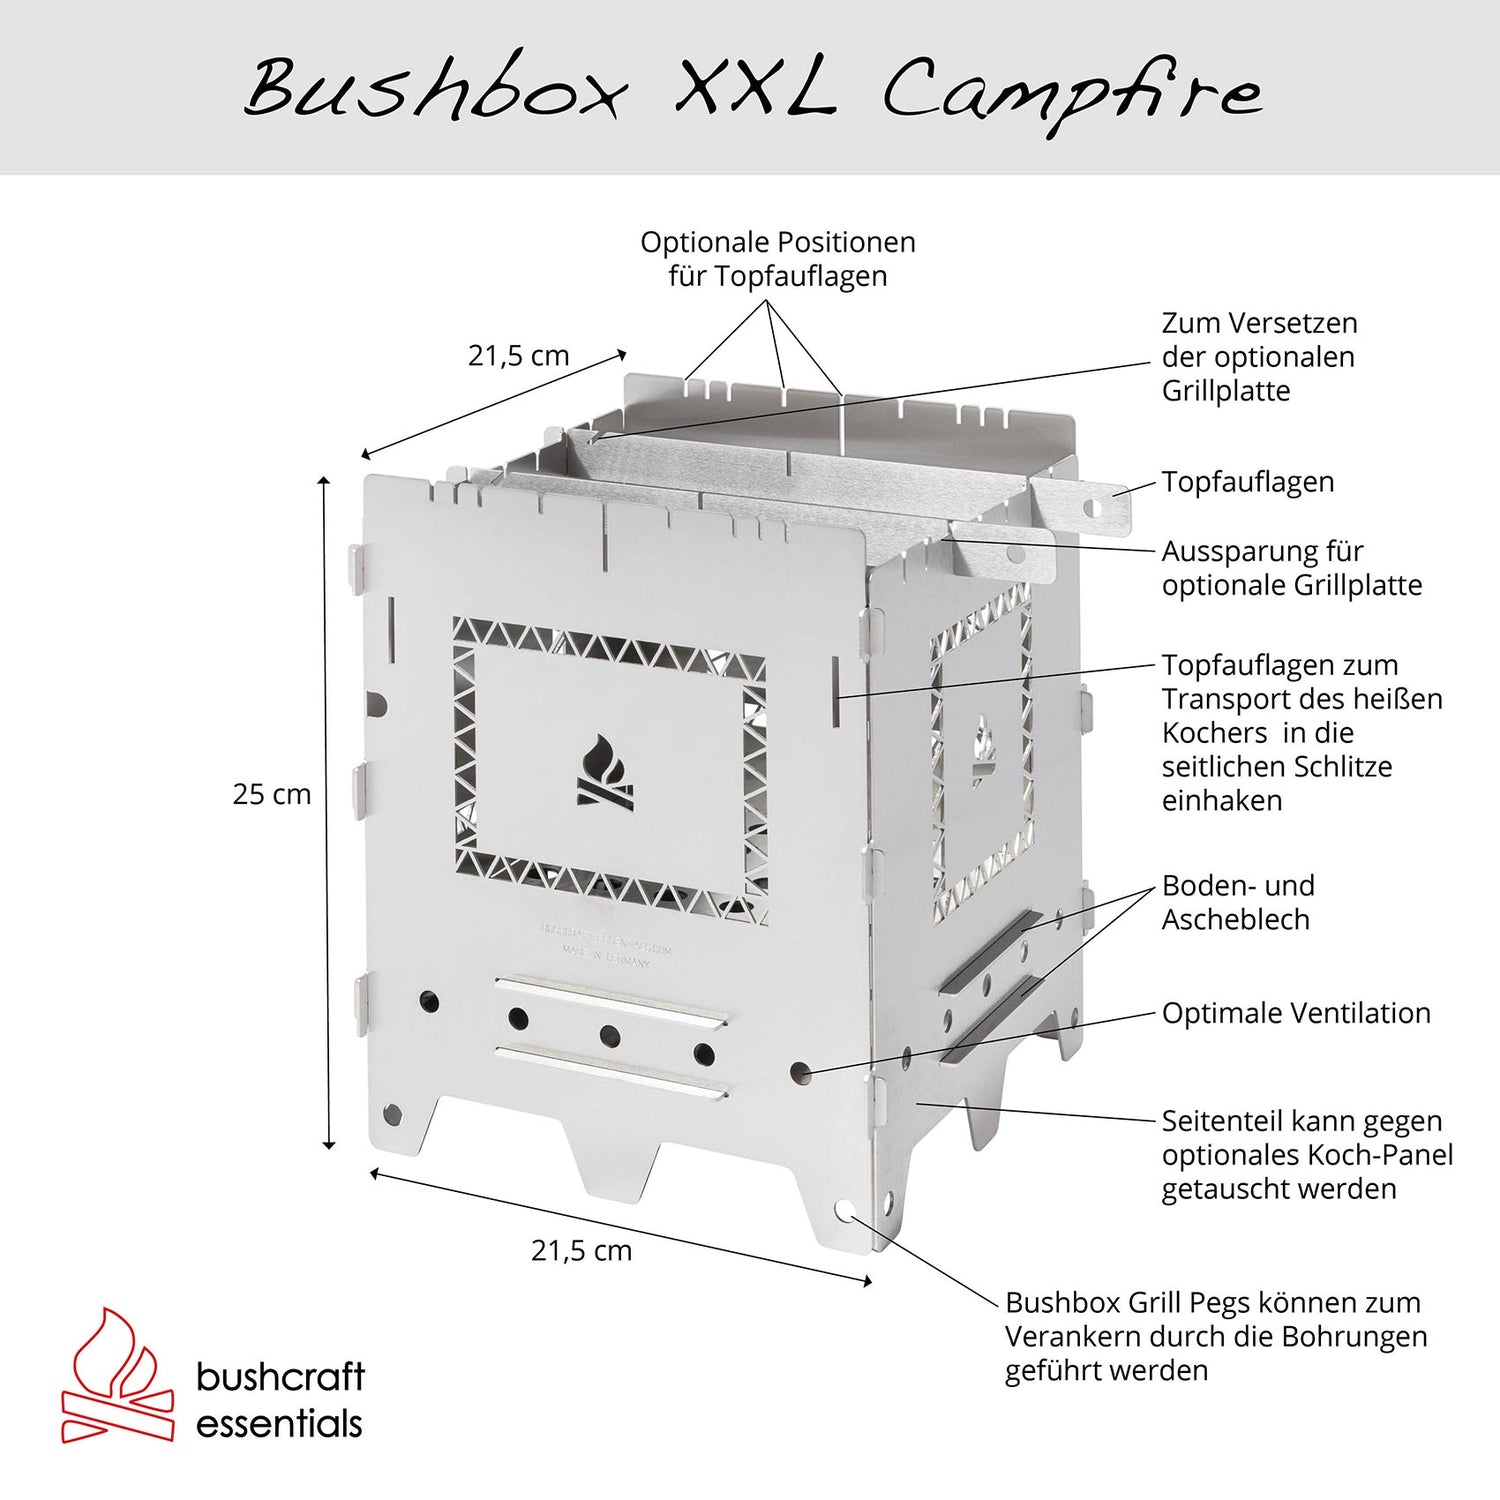 Bushbox XXL Campfire